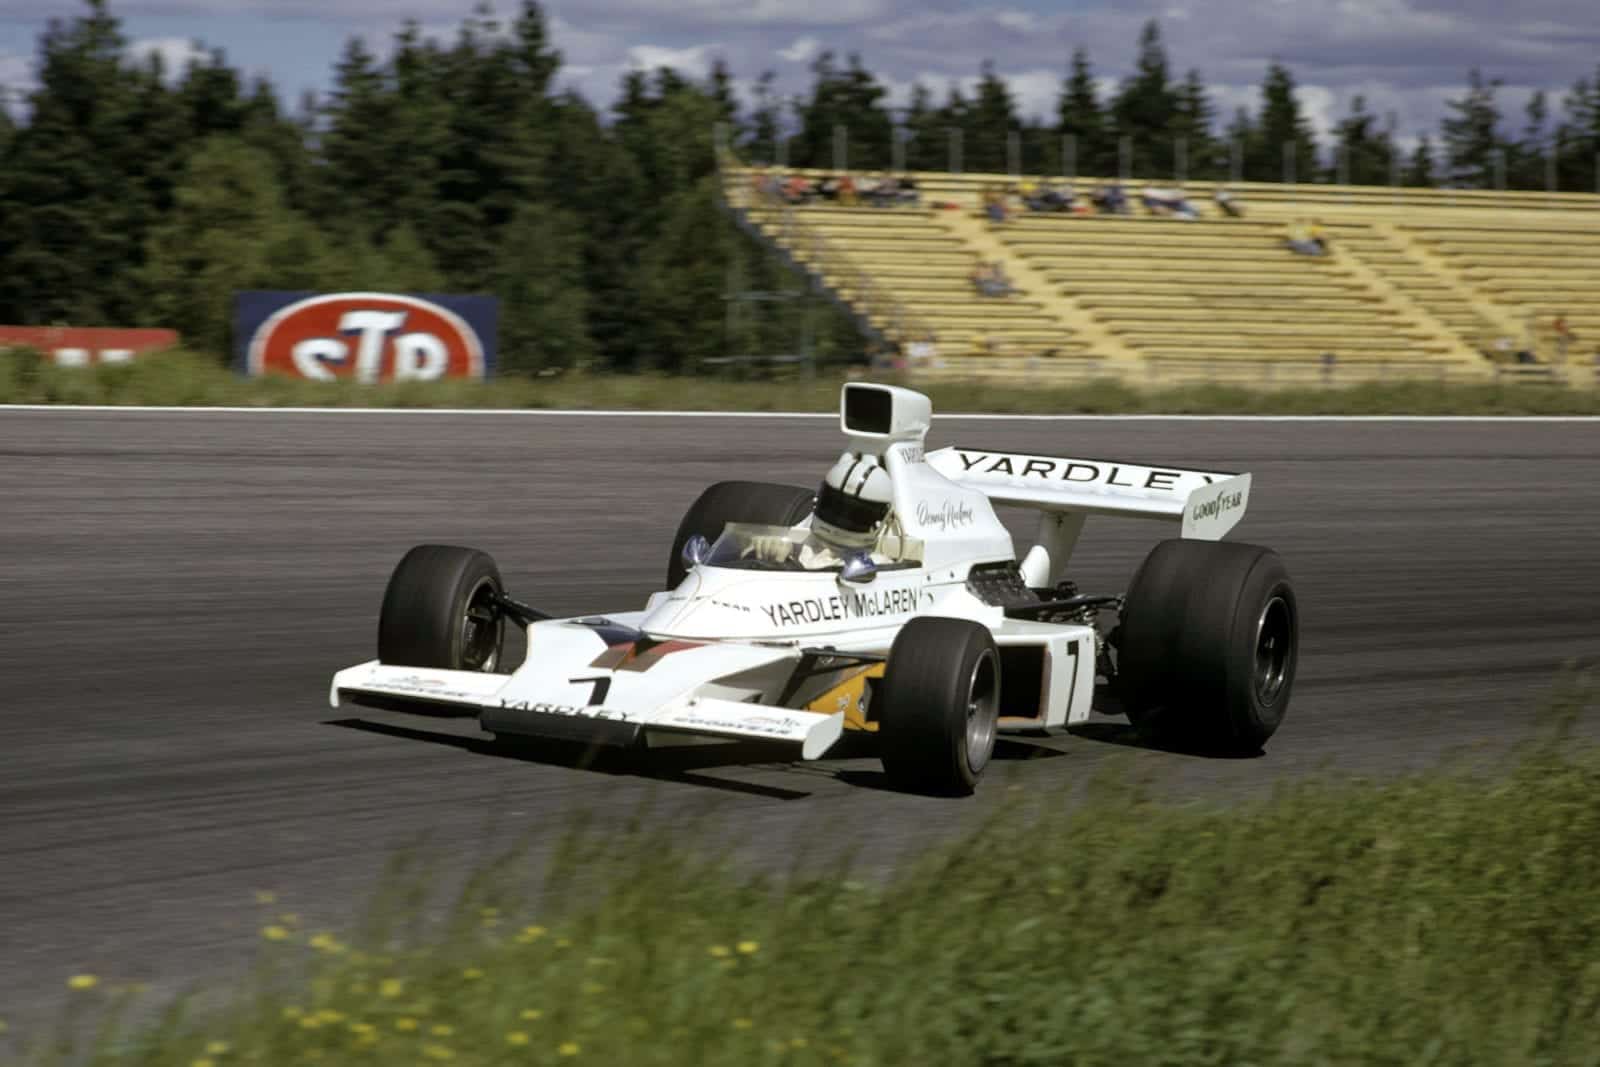 Denny Hulme driving for McLaren at the 1973 Swedish Grand Prix.